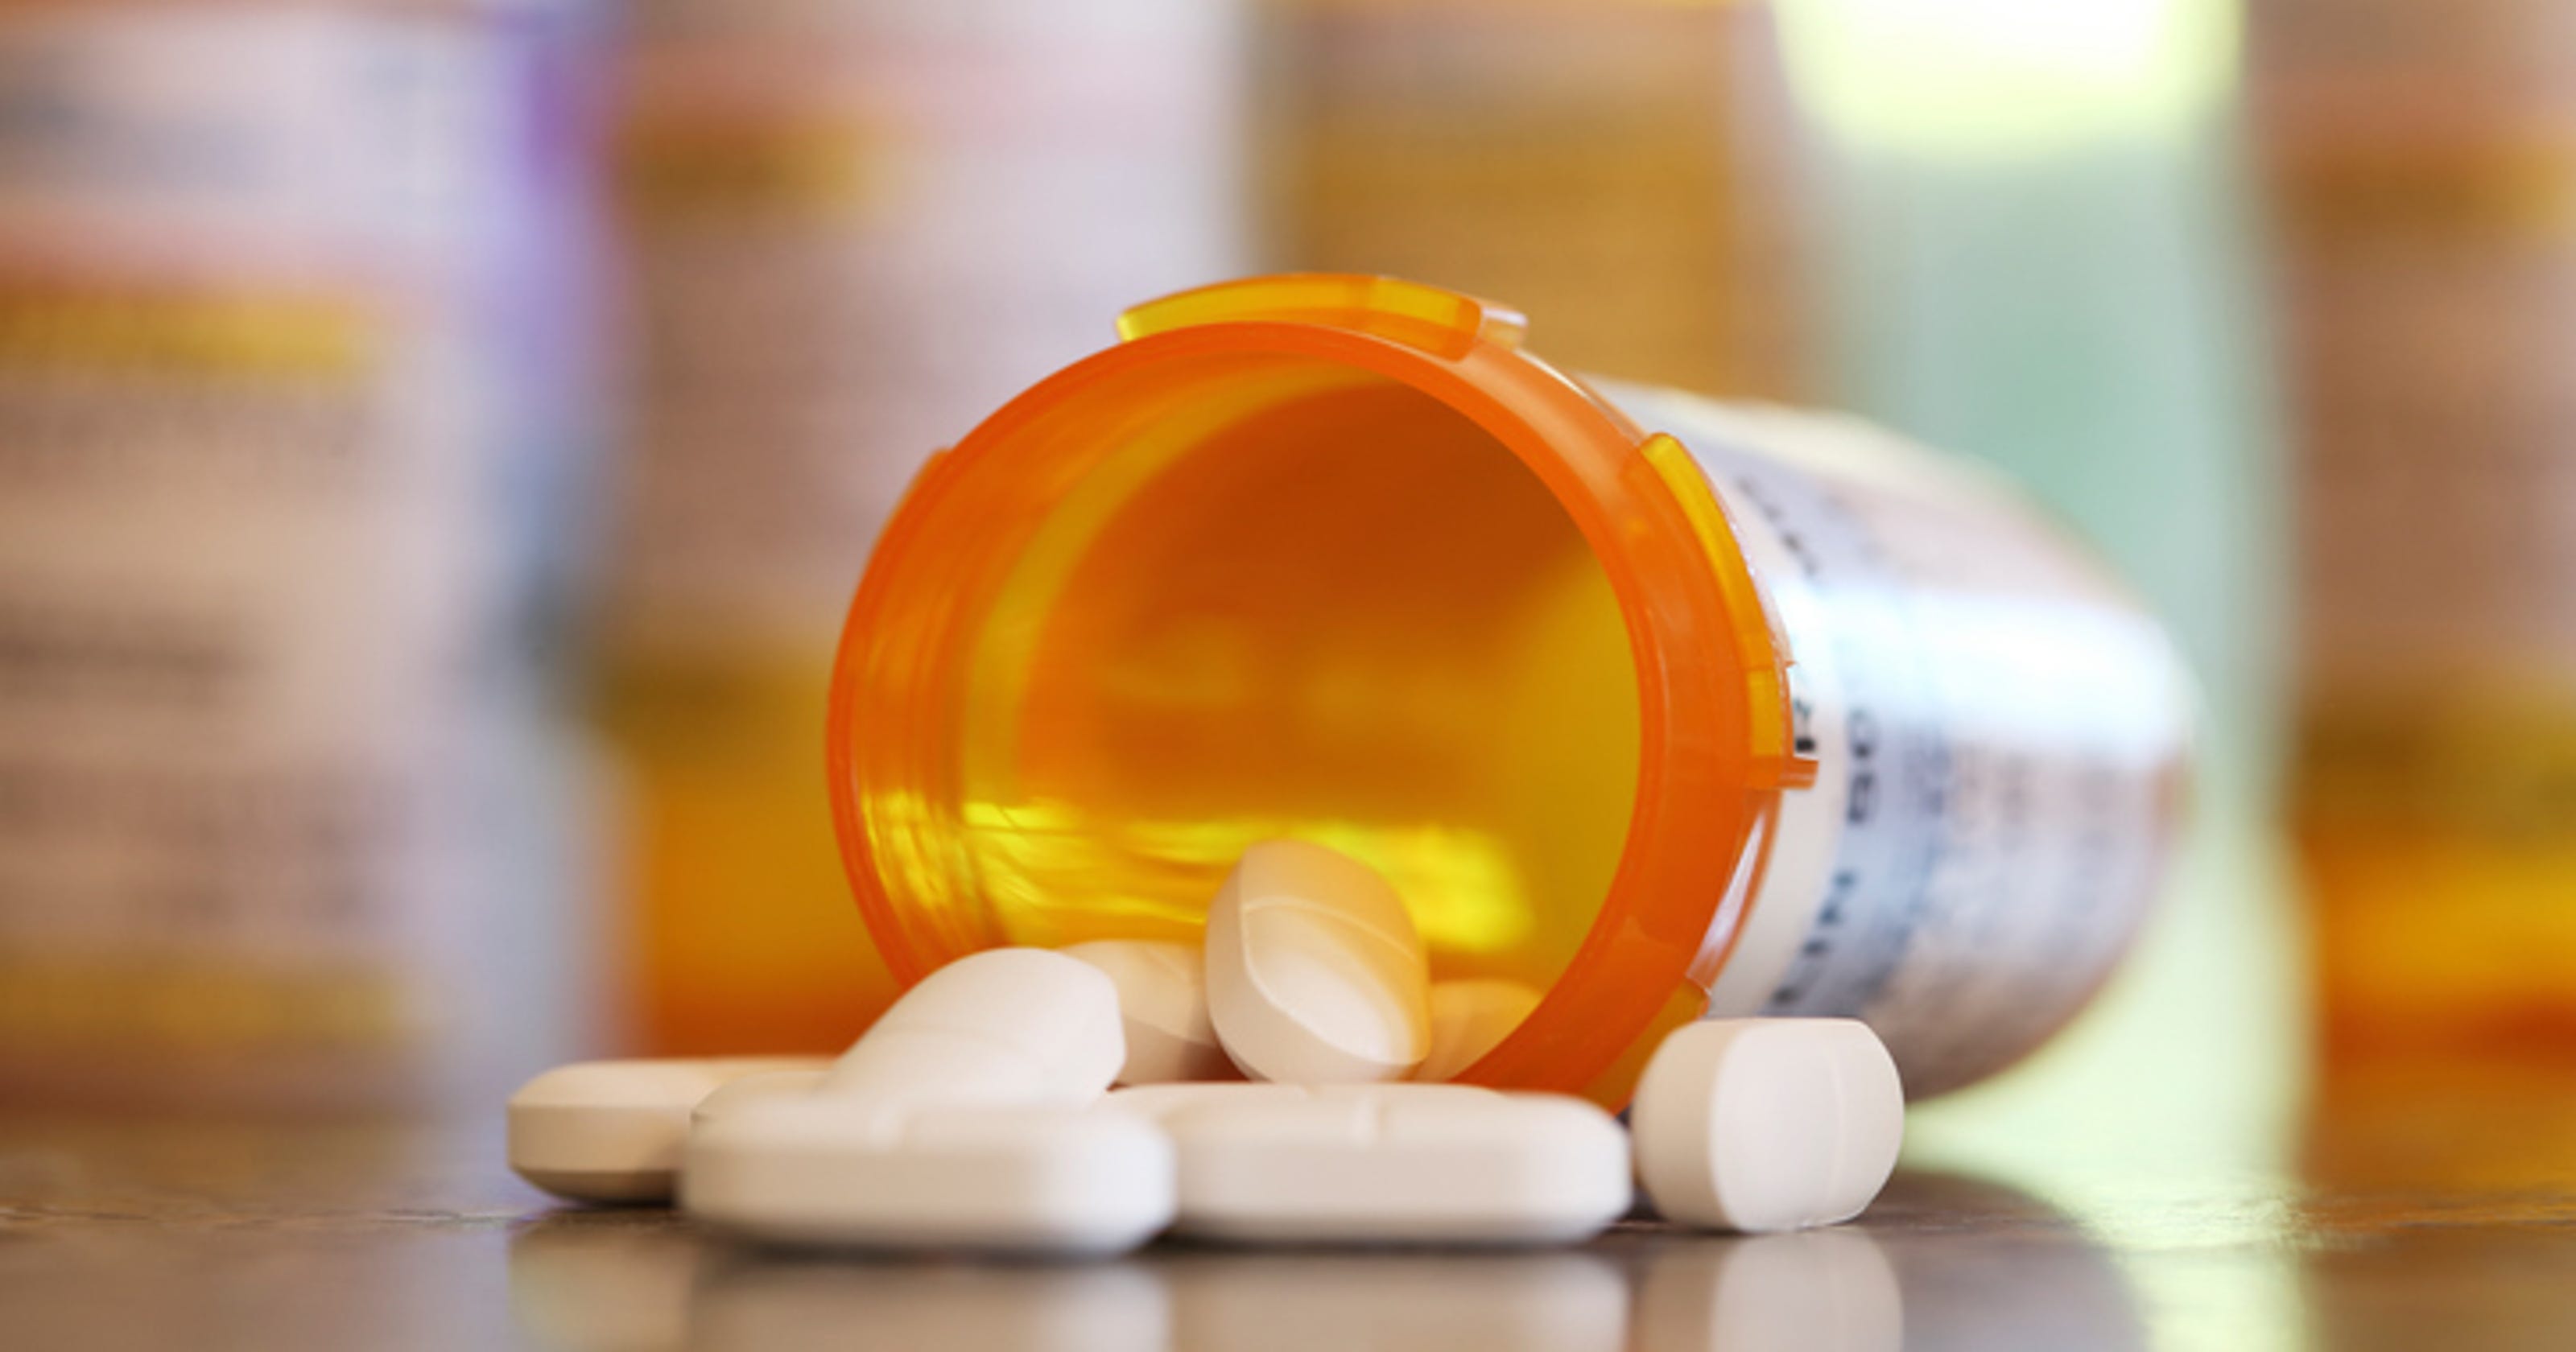 bill-would-require-locks-on-opioid-prescription-bottles